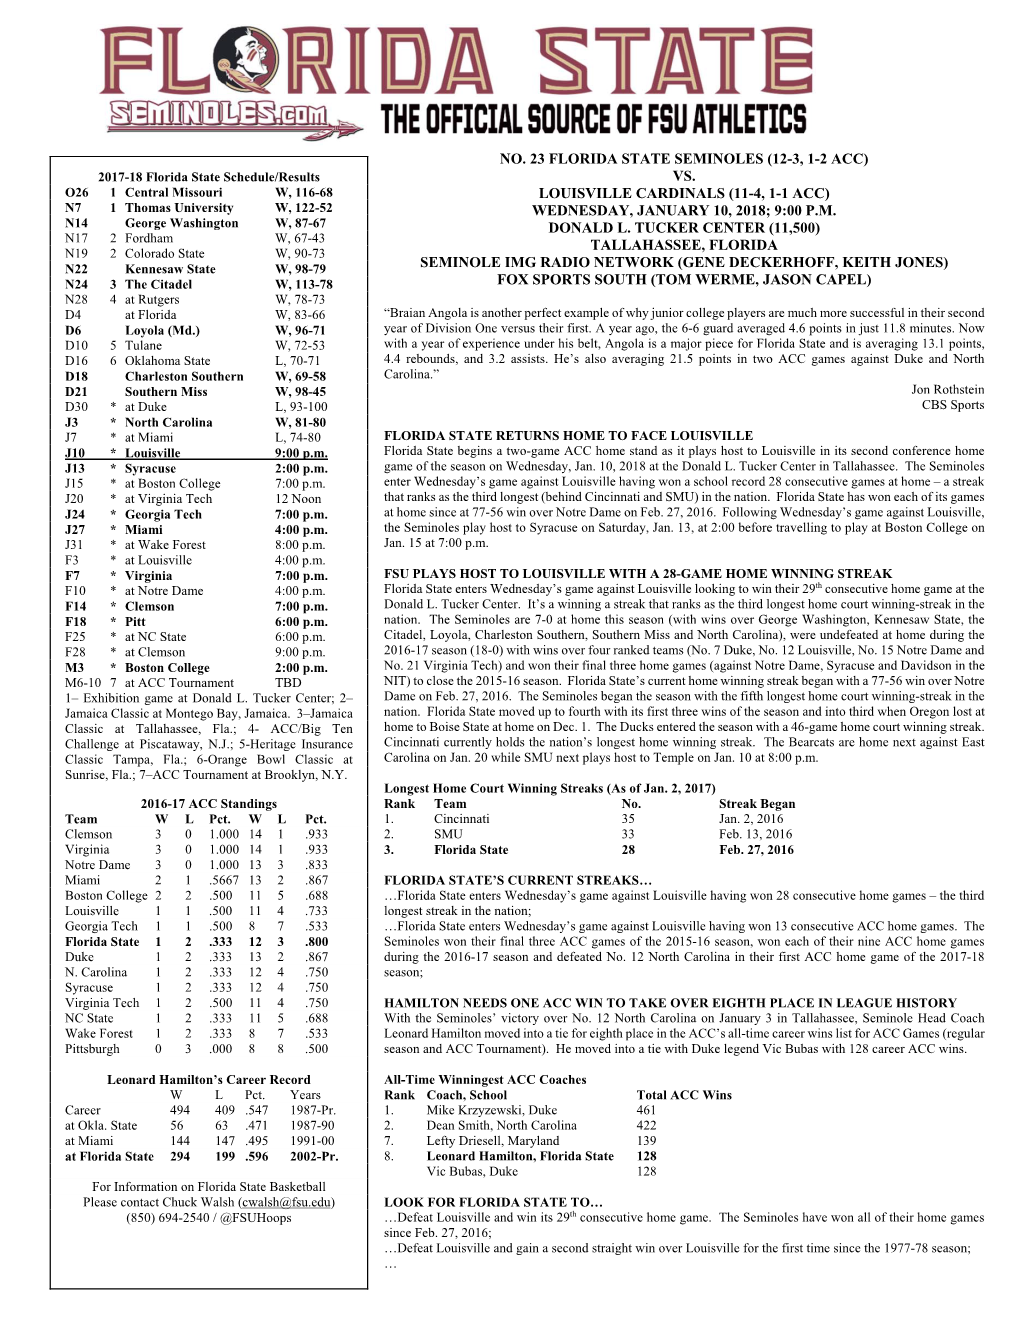 No. 23 Florida State Seminoles (12-3, 1-2 Acc) Vs. Louisville